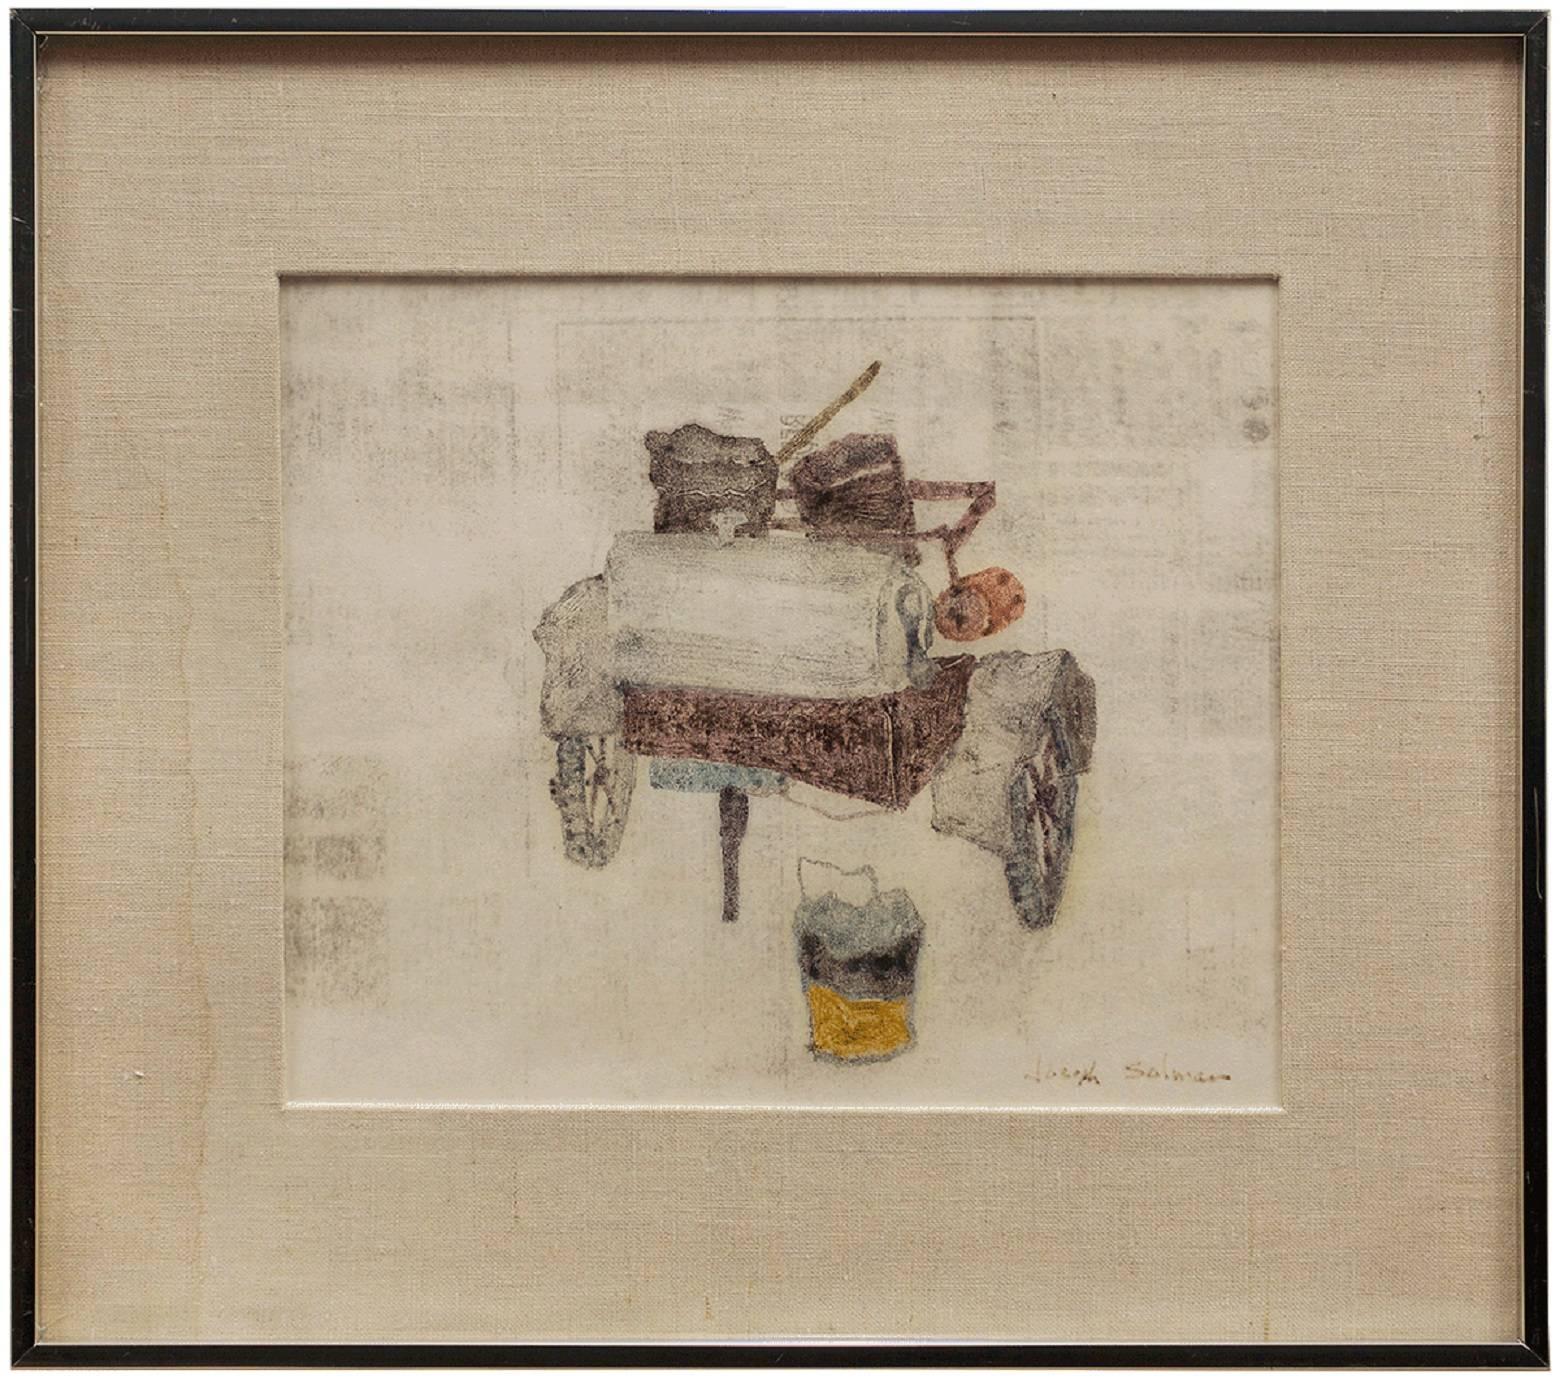 Old Fire Wagon, Monotype - Art by Joseph Solman